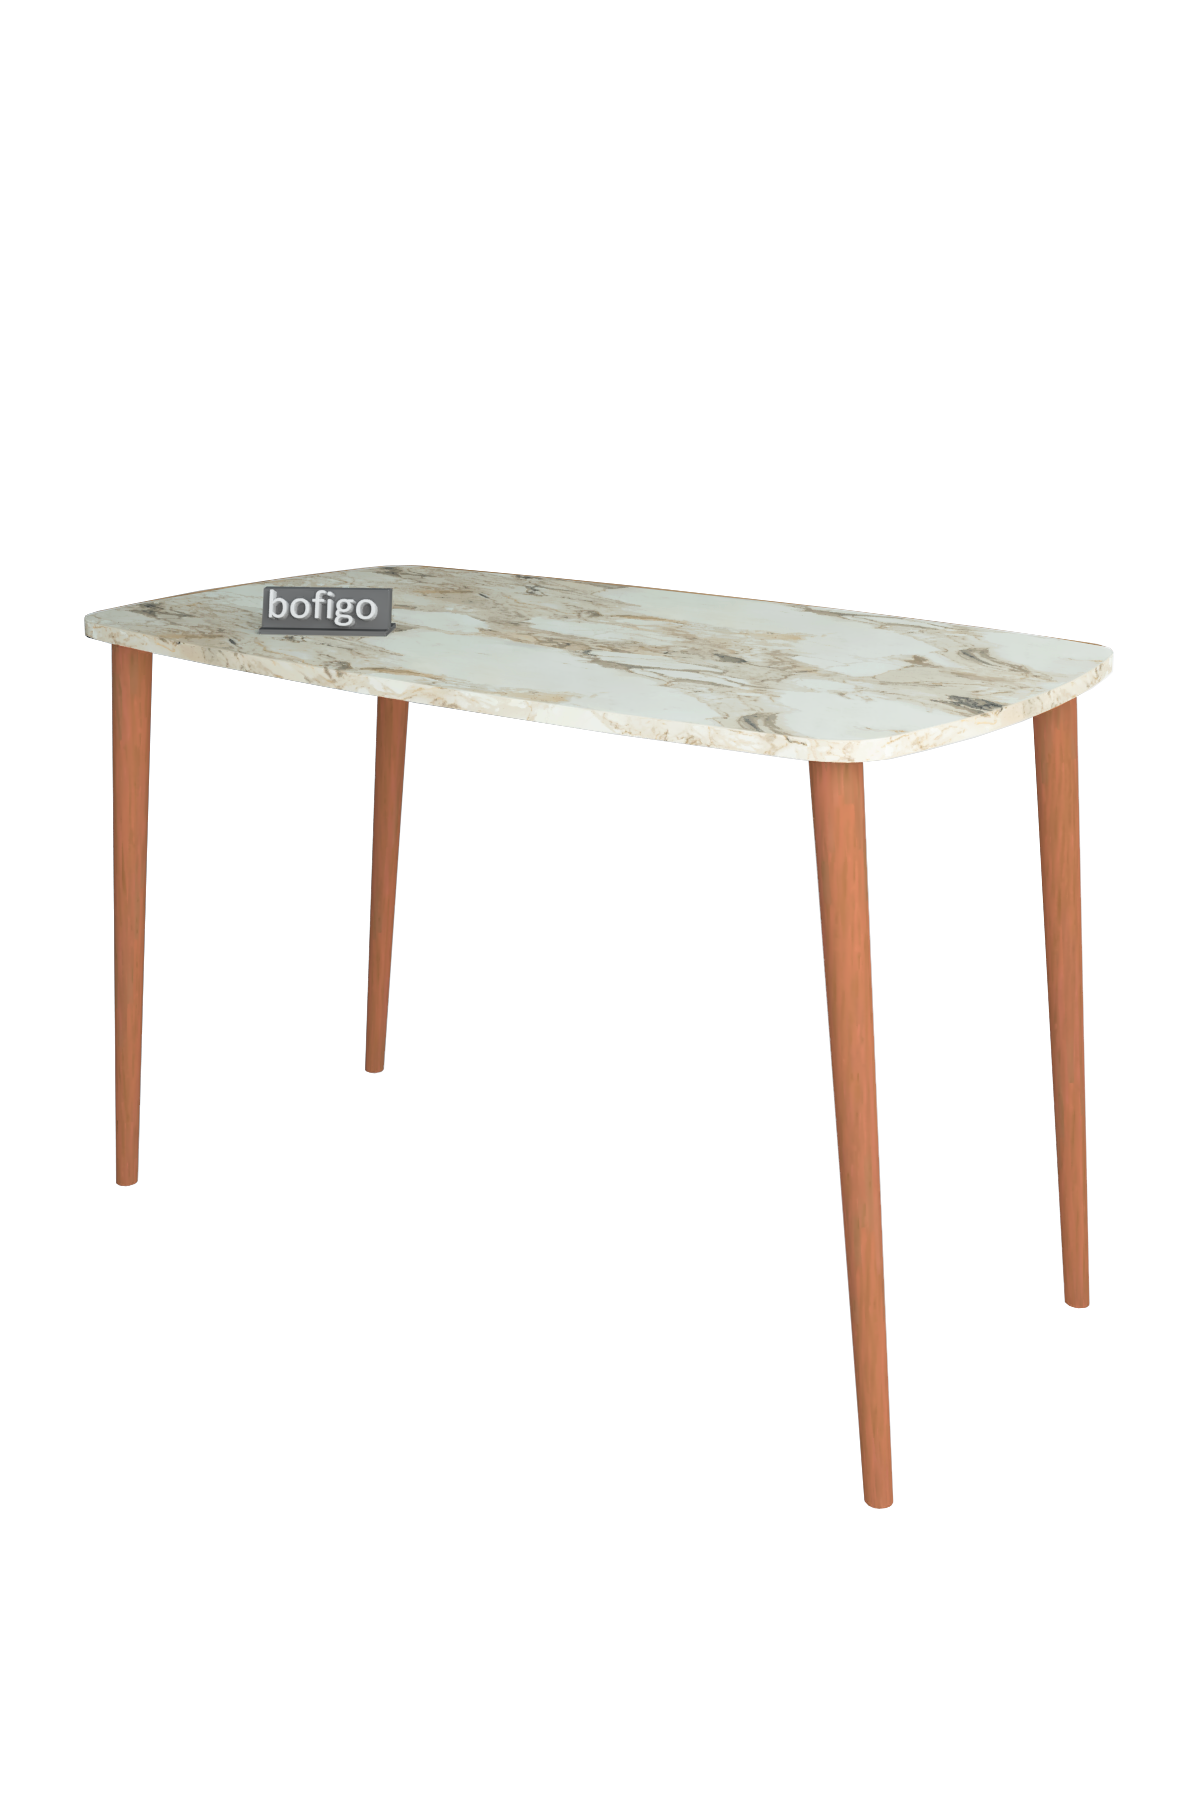 Bofigo Desk 60x105 Cm Efes (Wooden Leg)